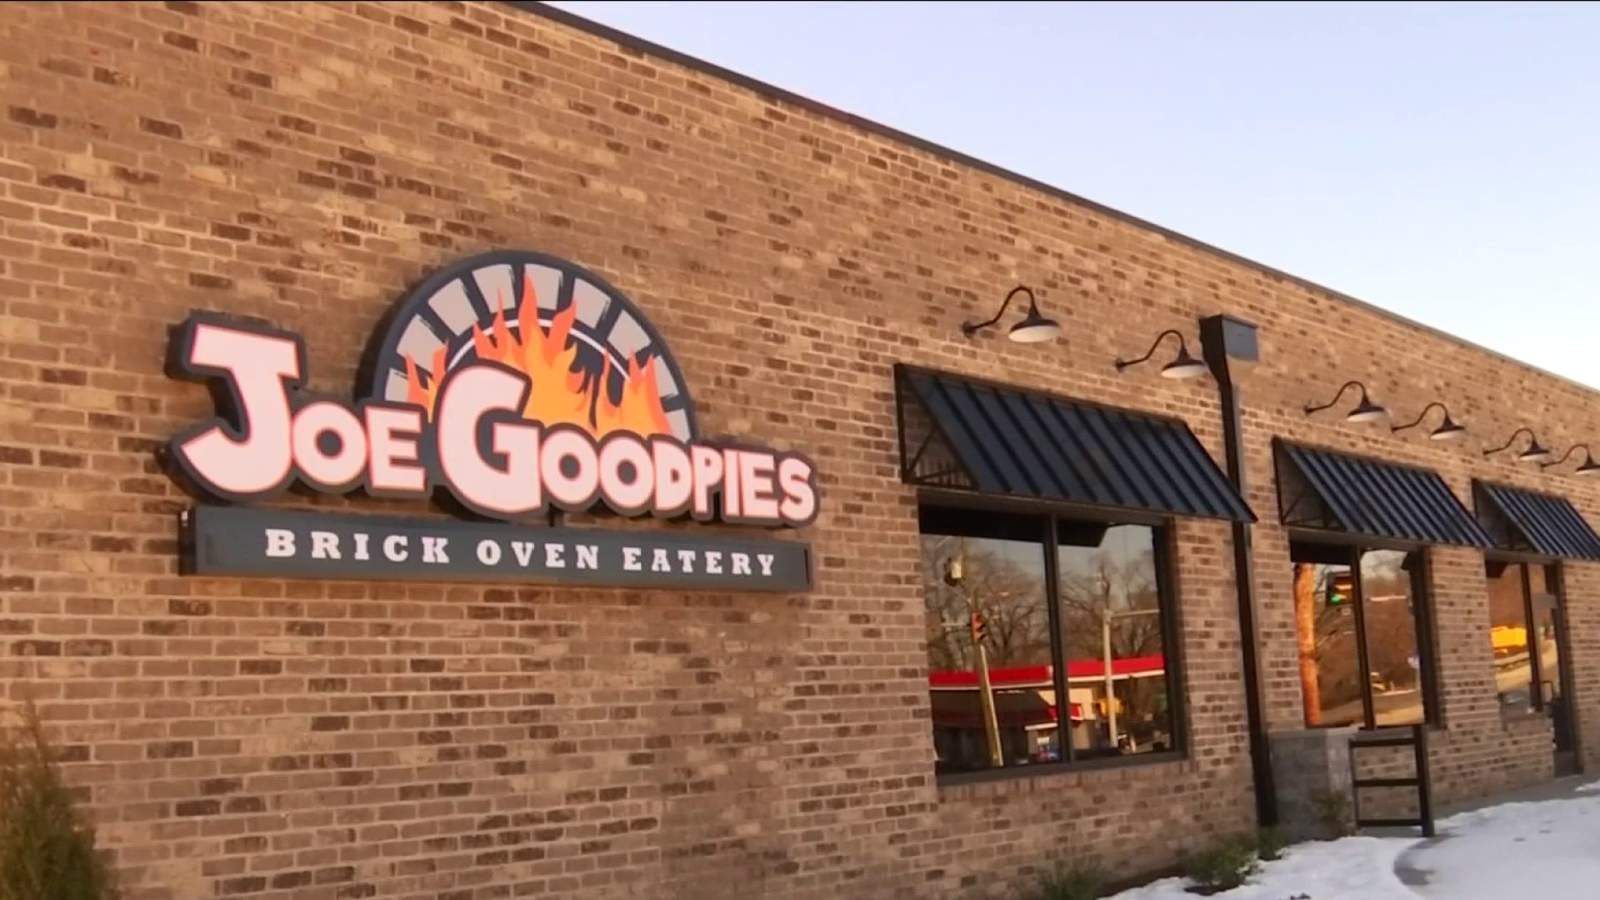 New pizza shop Joe Goodpies set to open in Vinton Thursday